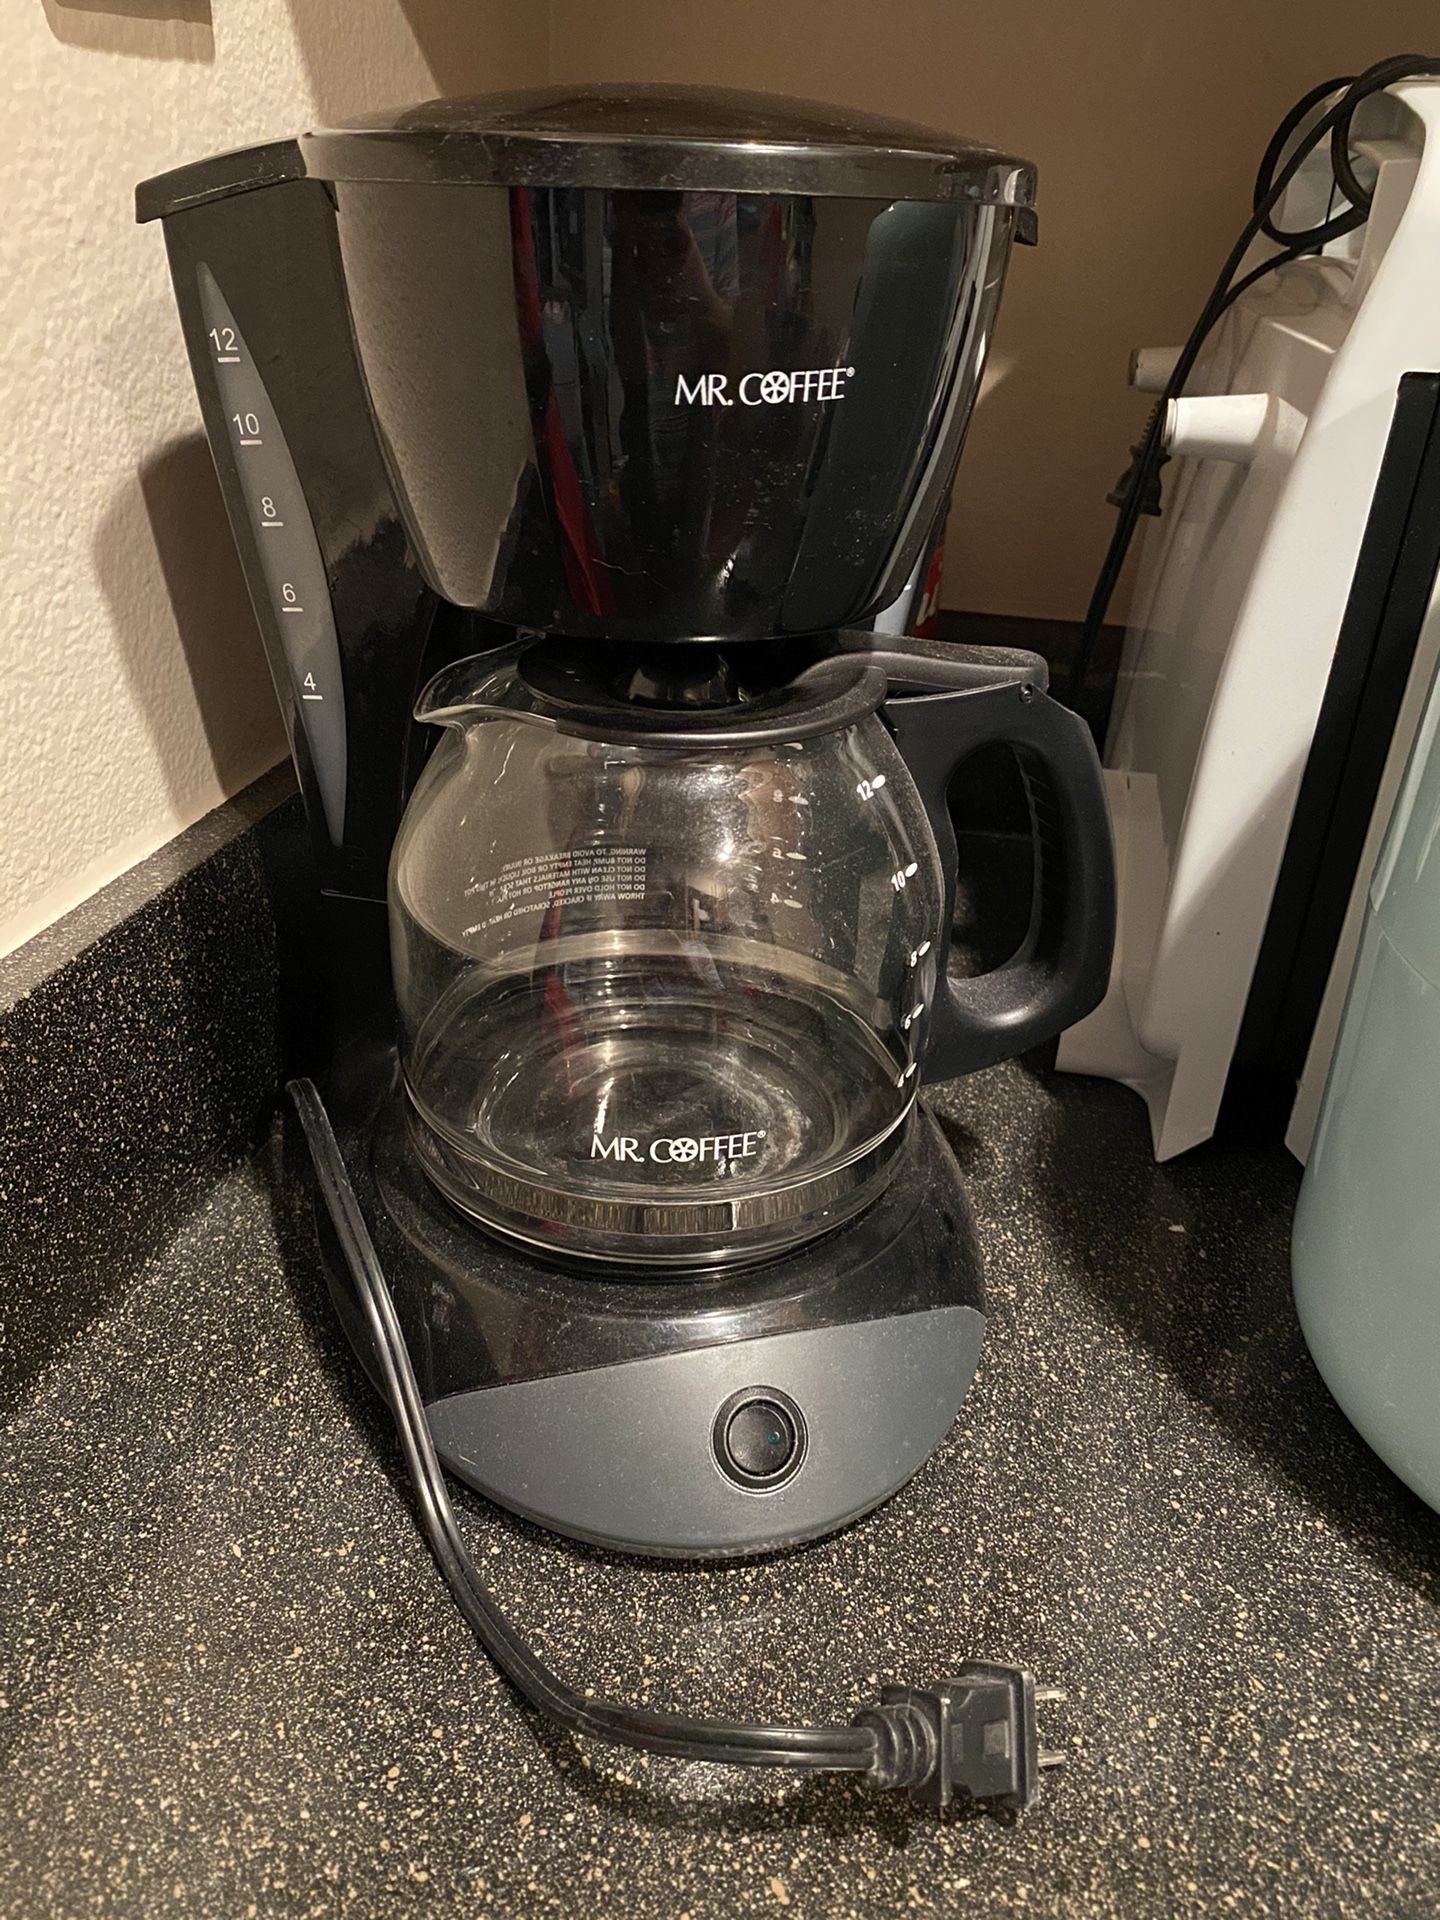 Mr. Coffee 12-cup coffee maker